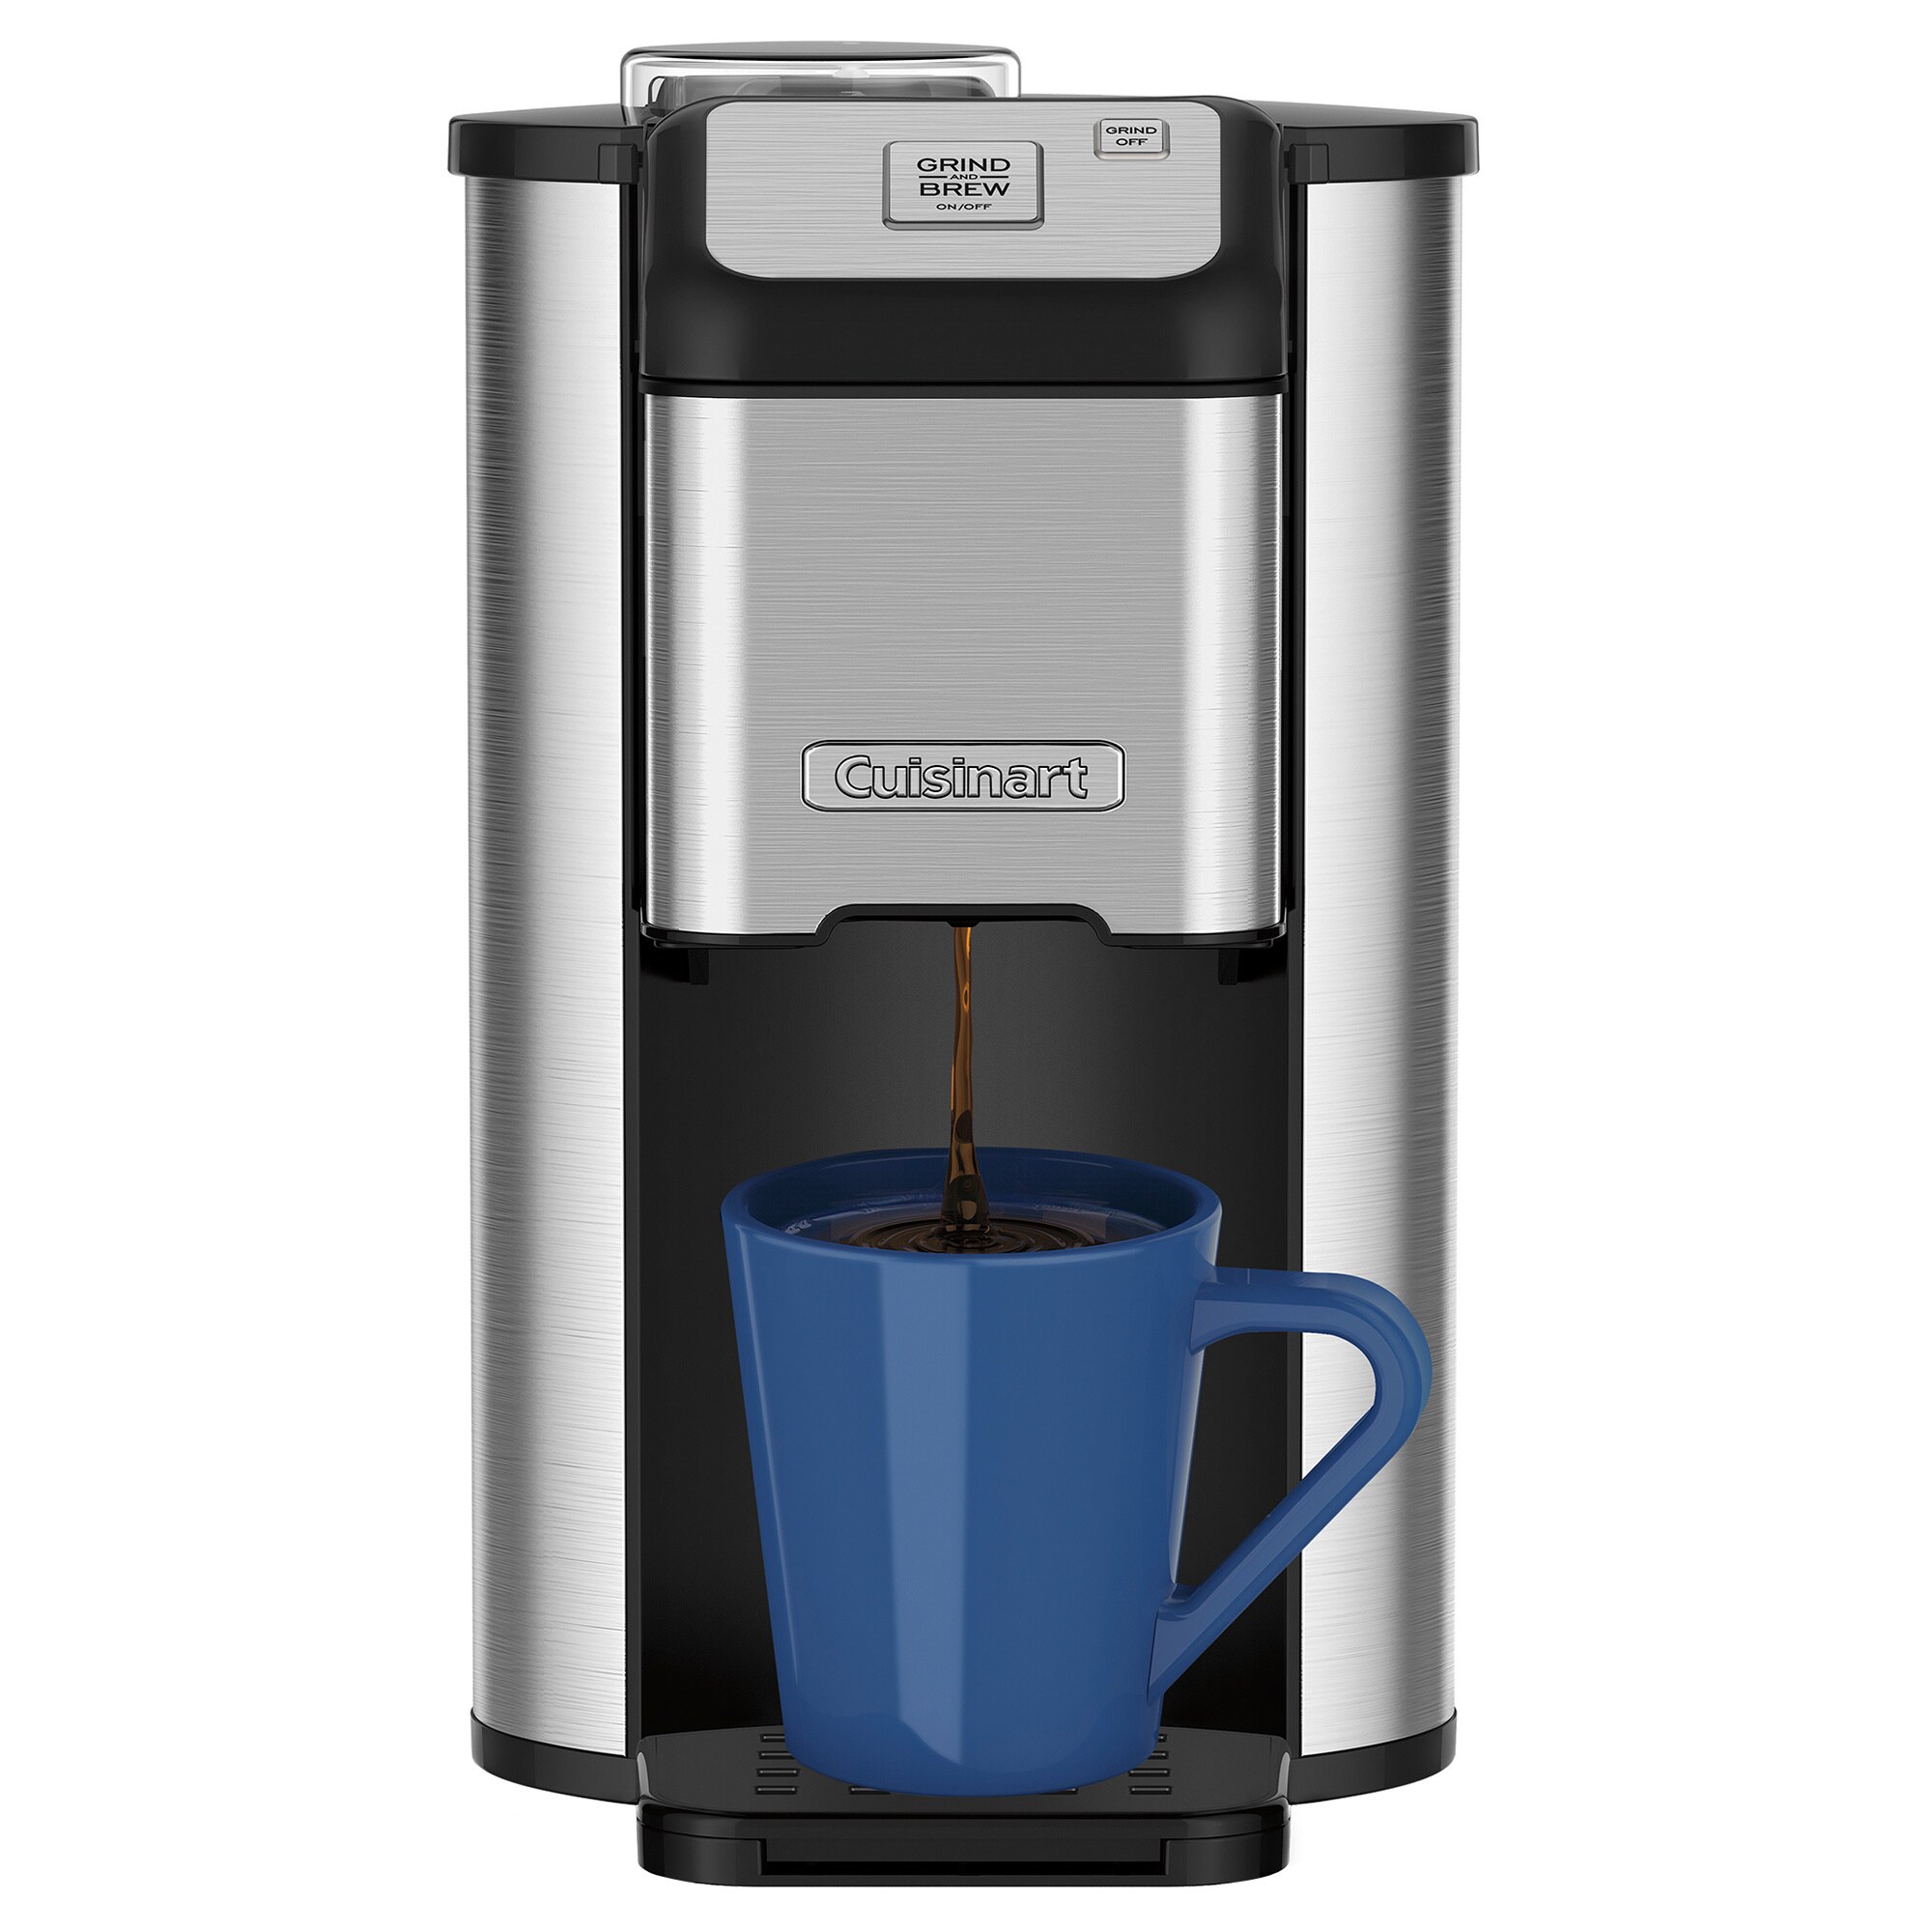 https://ak1.ostkcdn.com/images/products/9782068/Cuisinart-DGB1-Single-Cup-Grind-Brew-Coffeemaker-14efdf3d-15b6-4fd3-8801-0313e13edc17.jpg